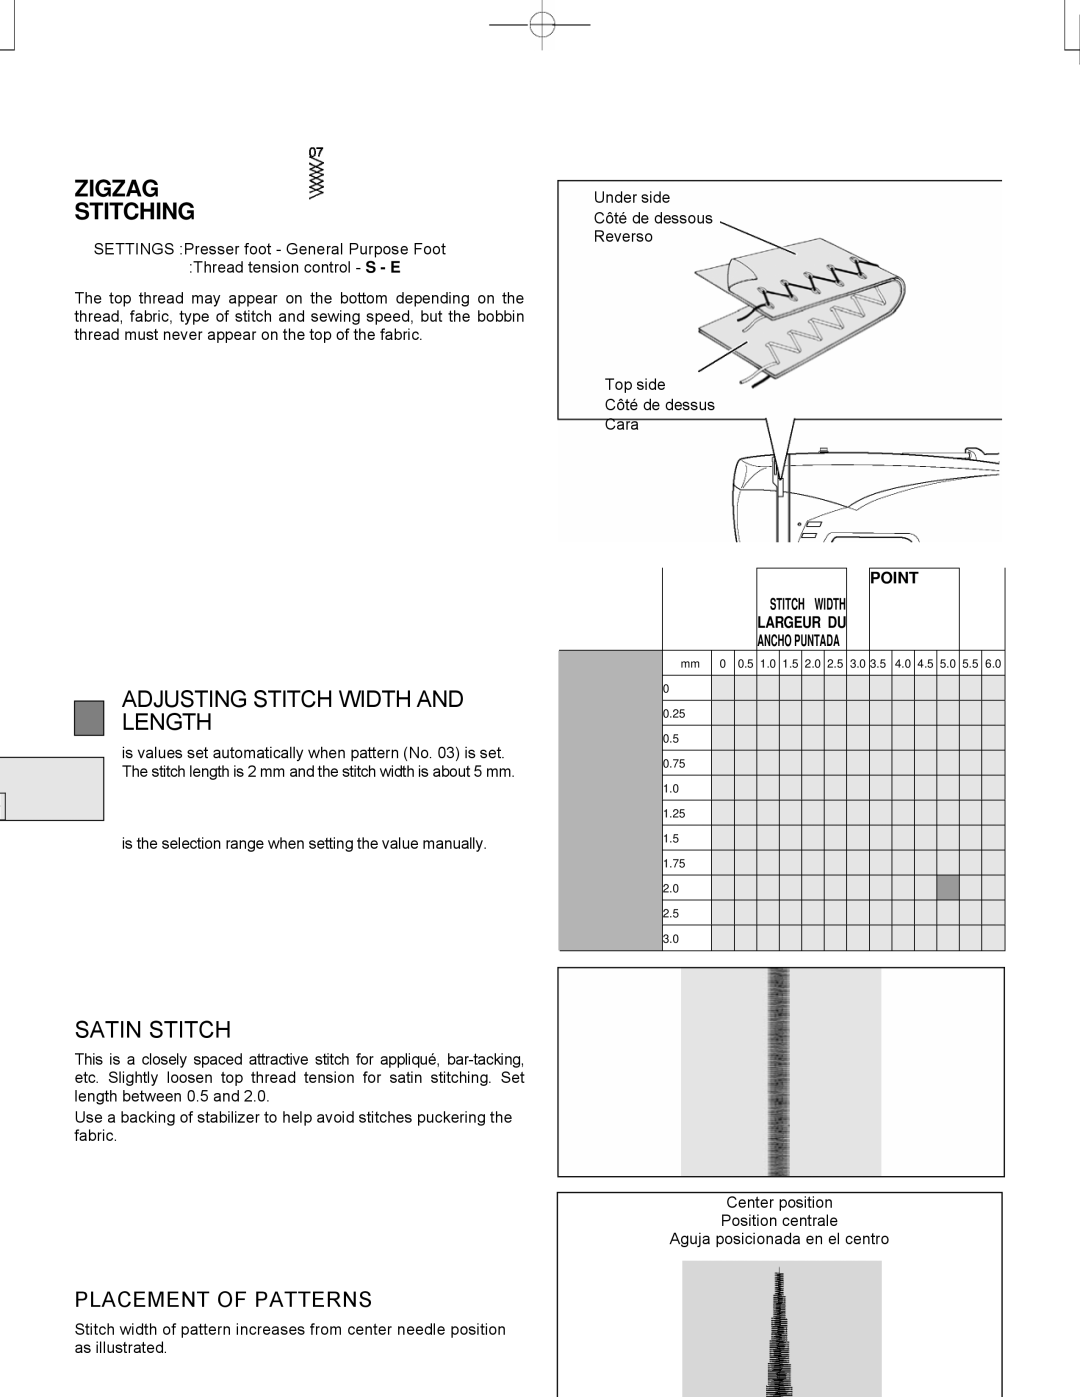 Singer CE-150 instruction manual Zigzag Stitching, Adjusting Stitch Width and Length, Satin Stitch 